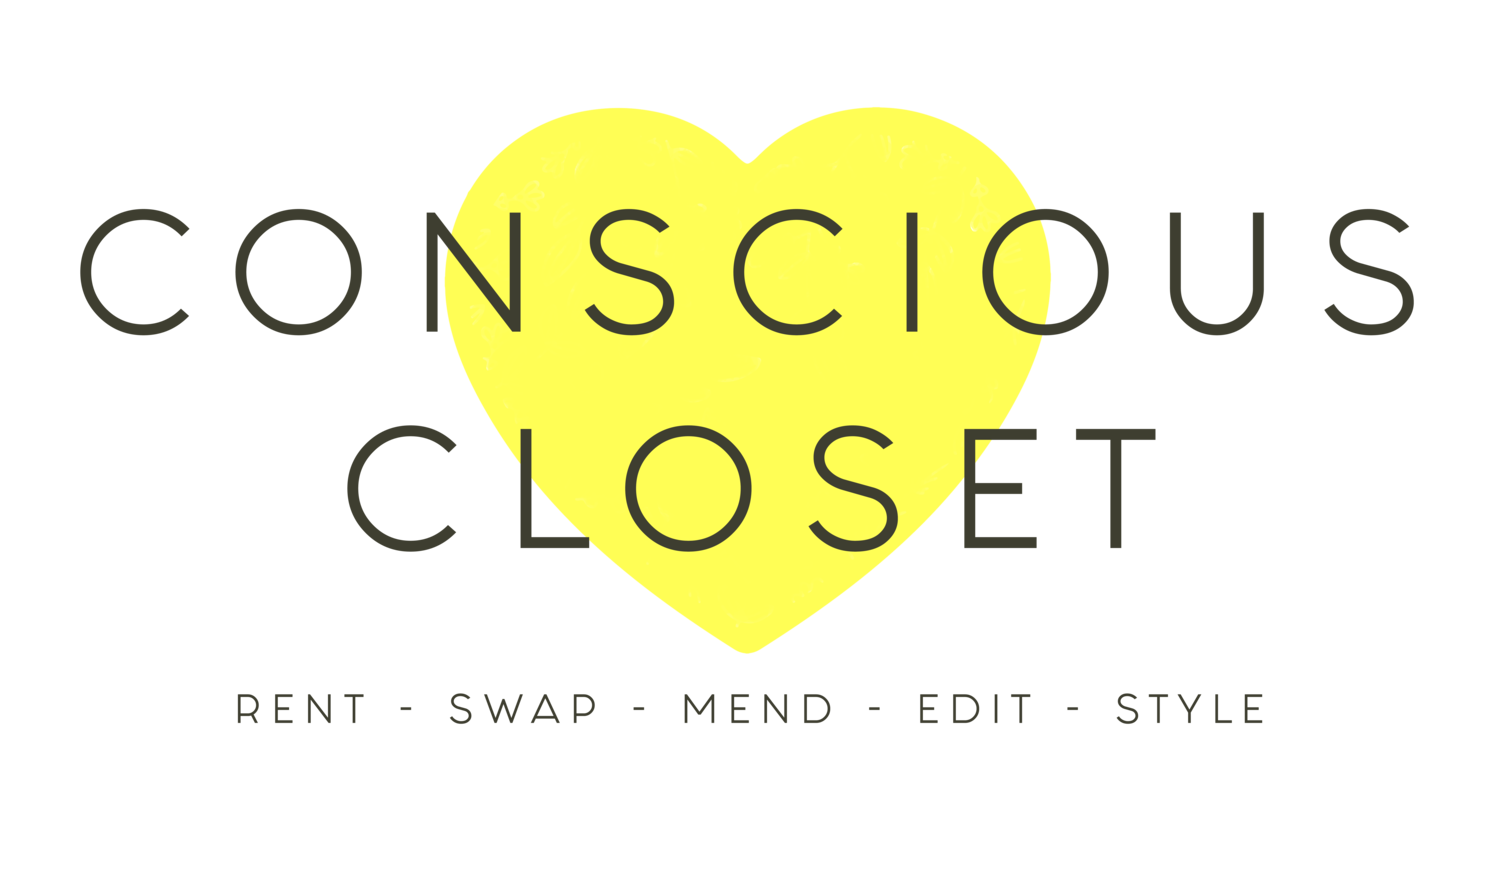 Conscious Closet